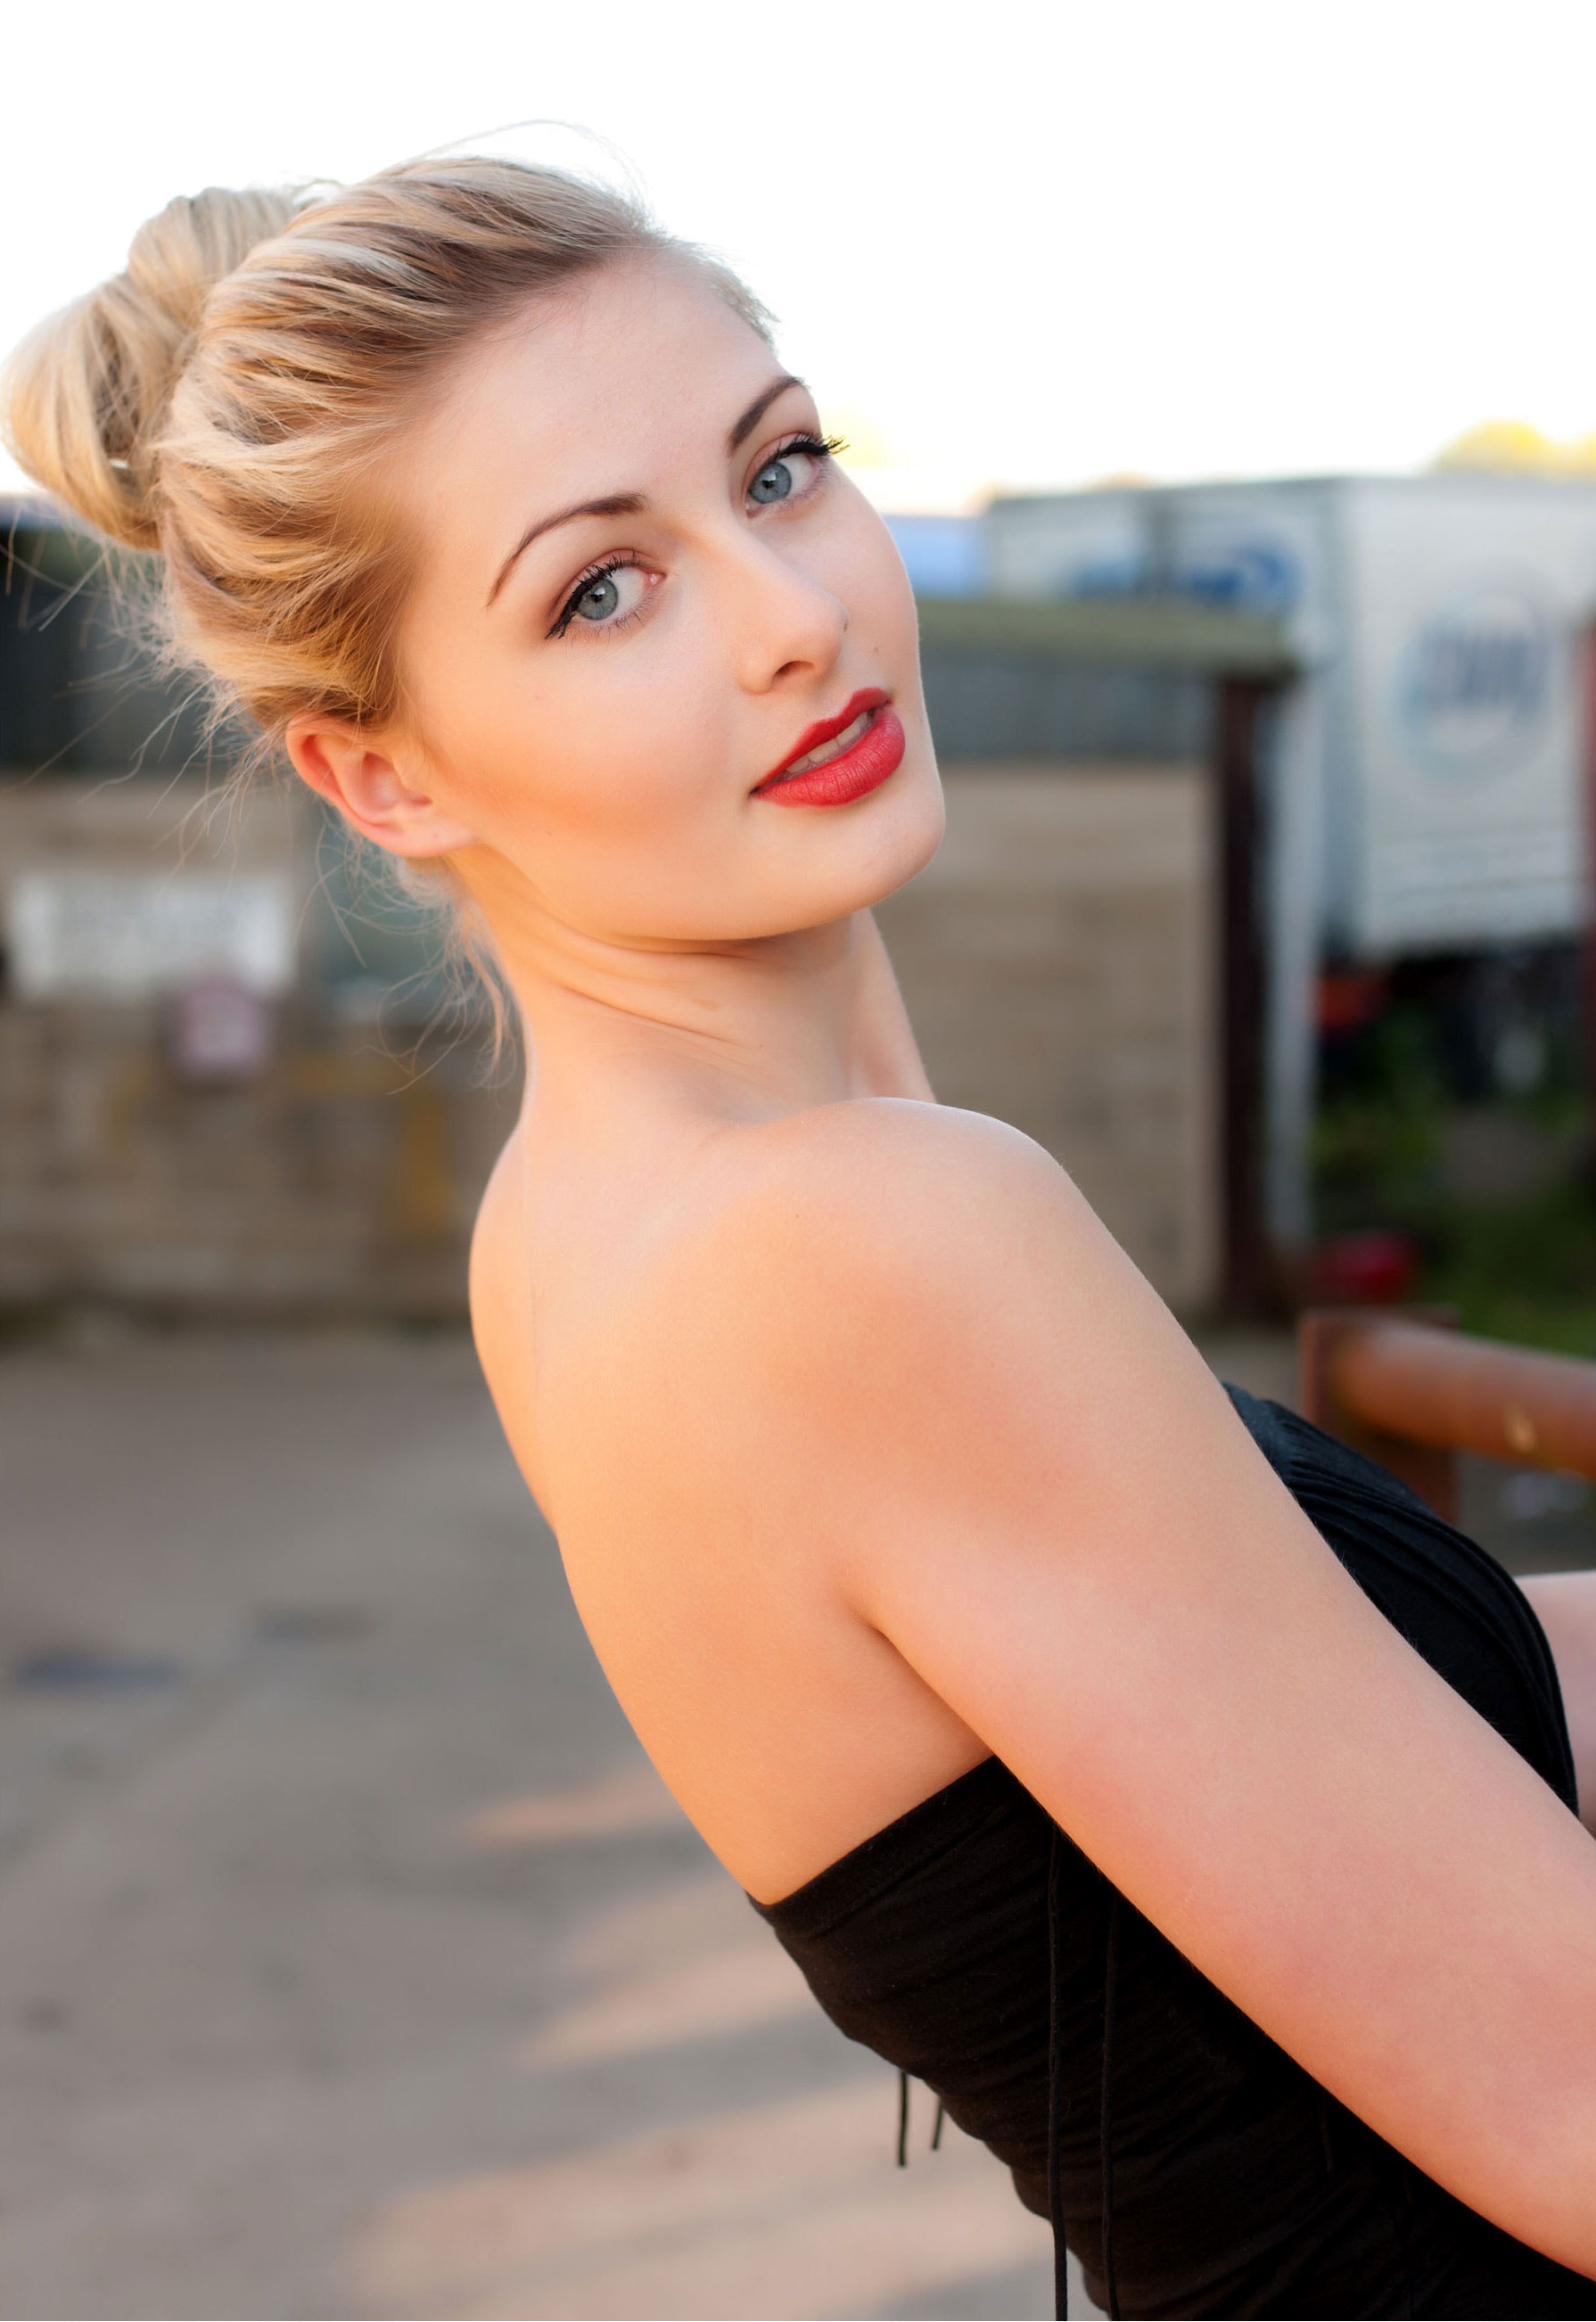 Looking At Viewer Bare Shoulders Model Women Outdoors Blonde Red Lipstick Black Dress Women 1790x2604